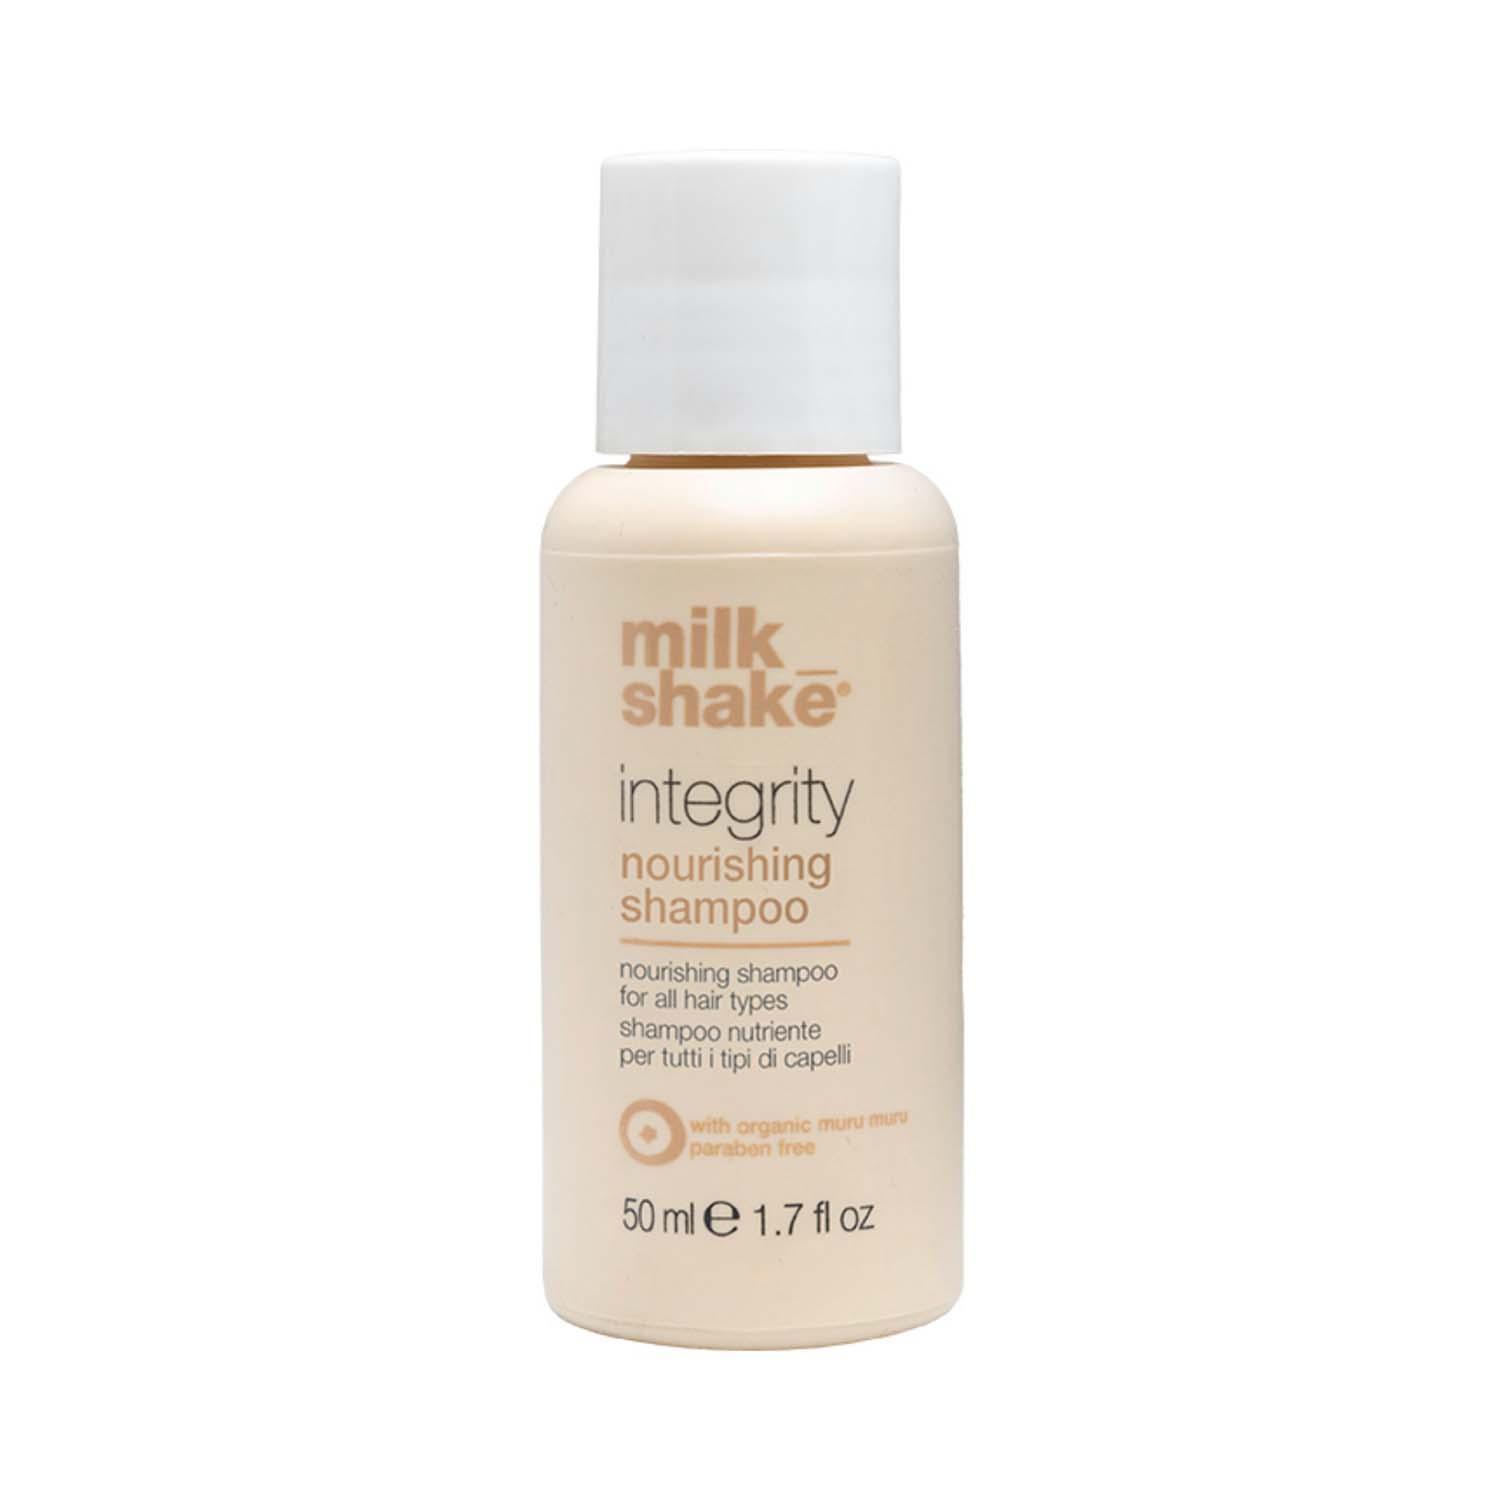 milk shake integrity shampoo (50ml)